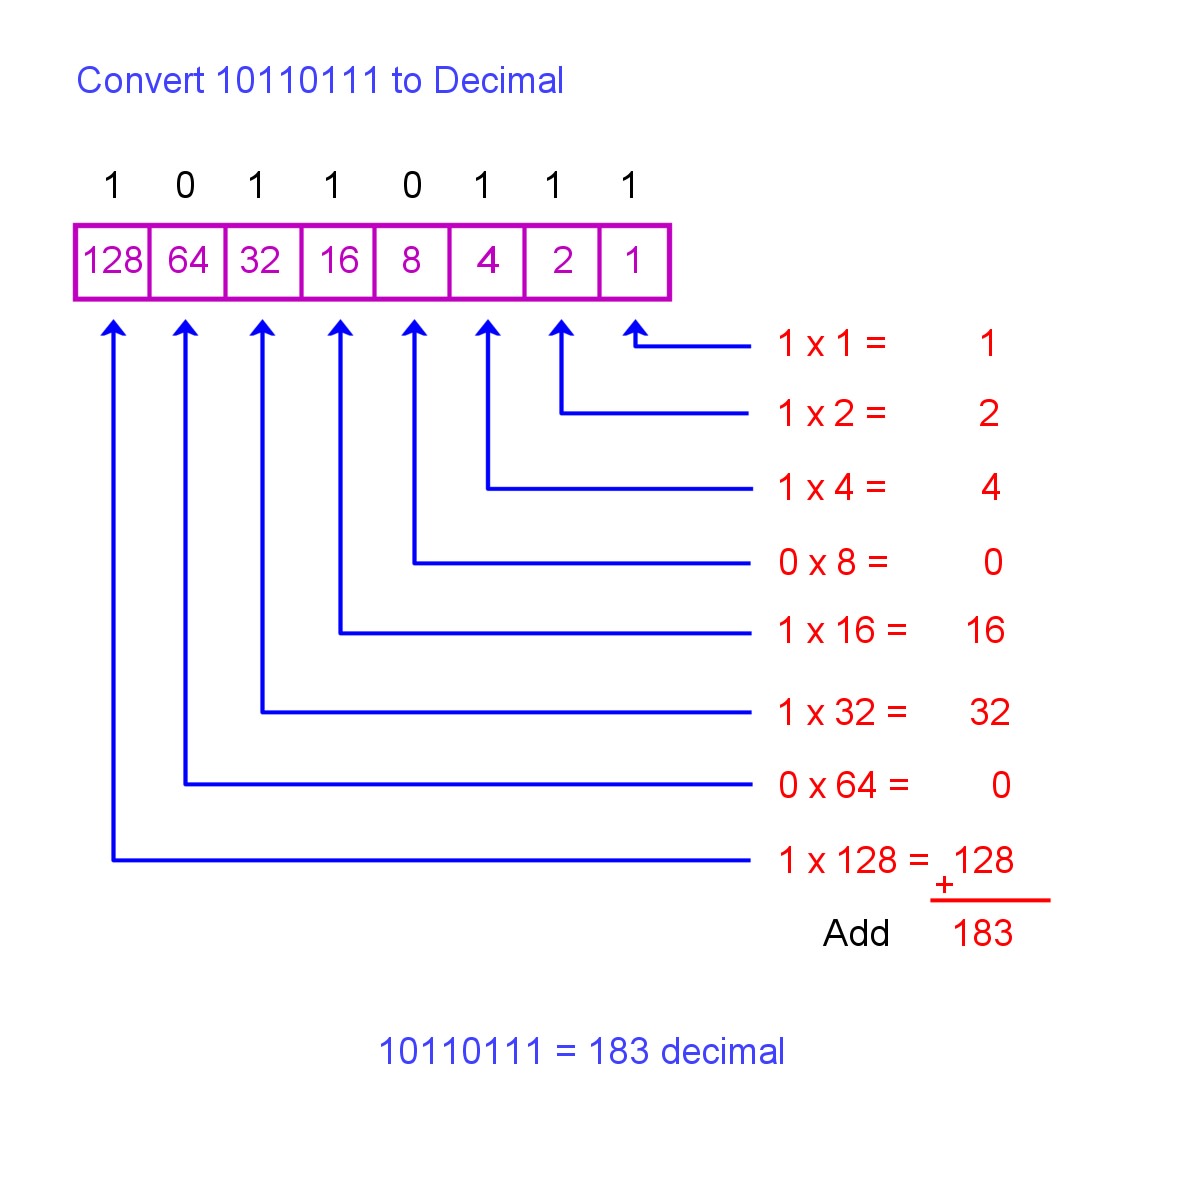 Decimal To Binary Chart